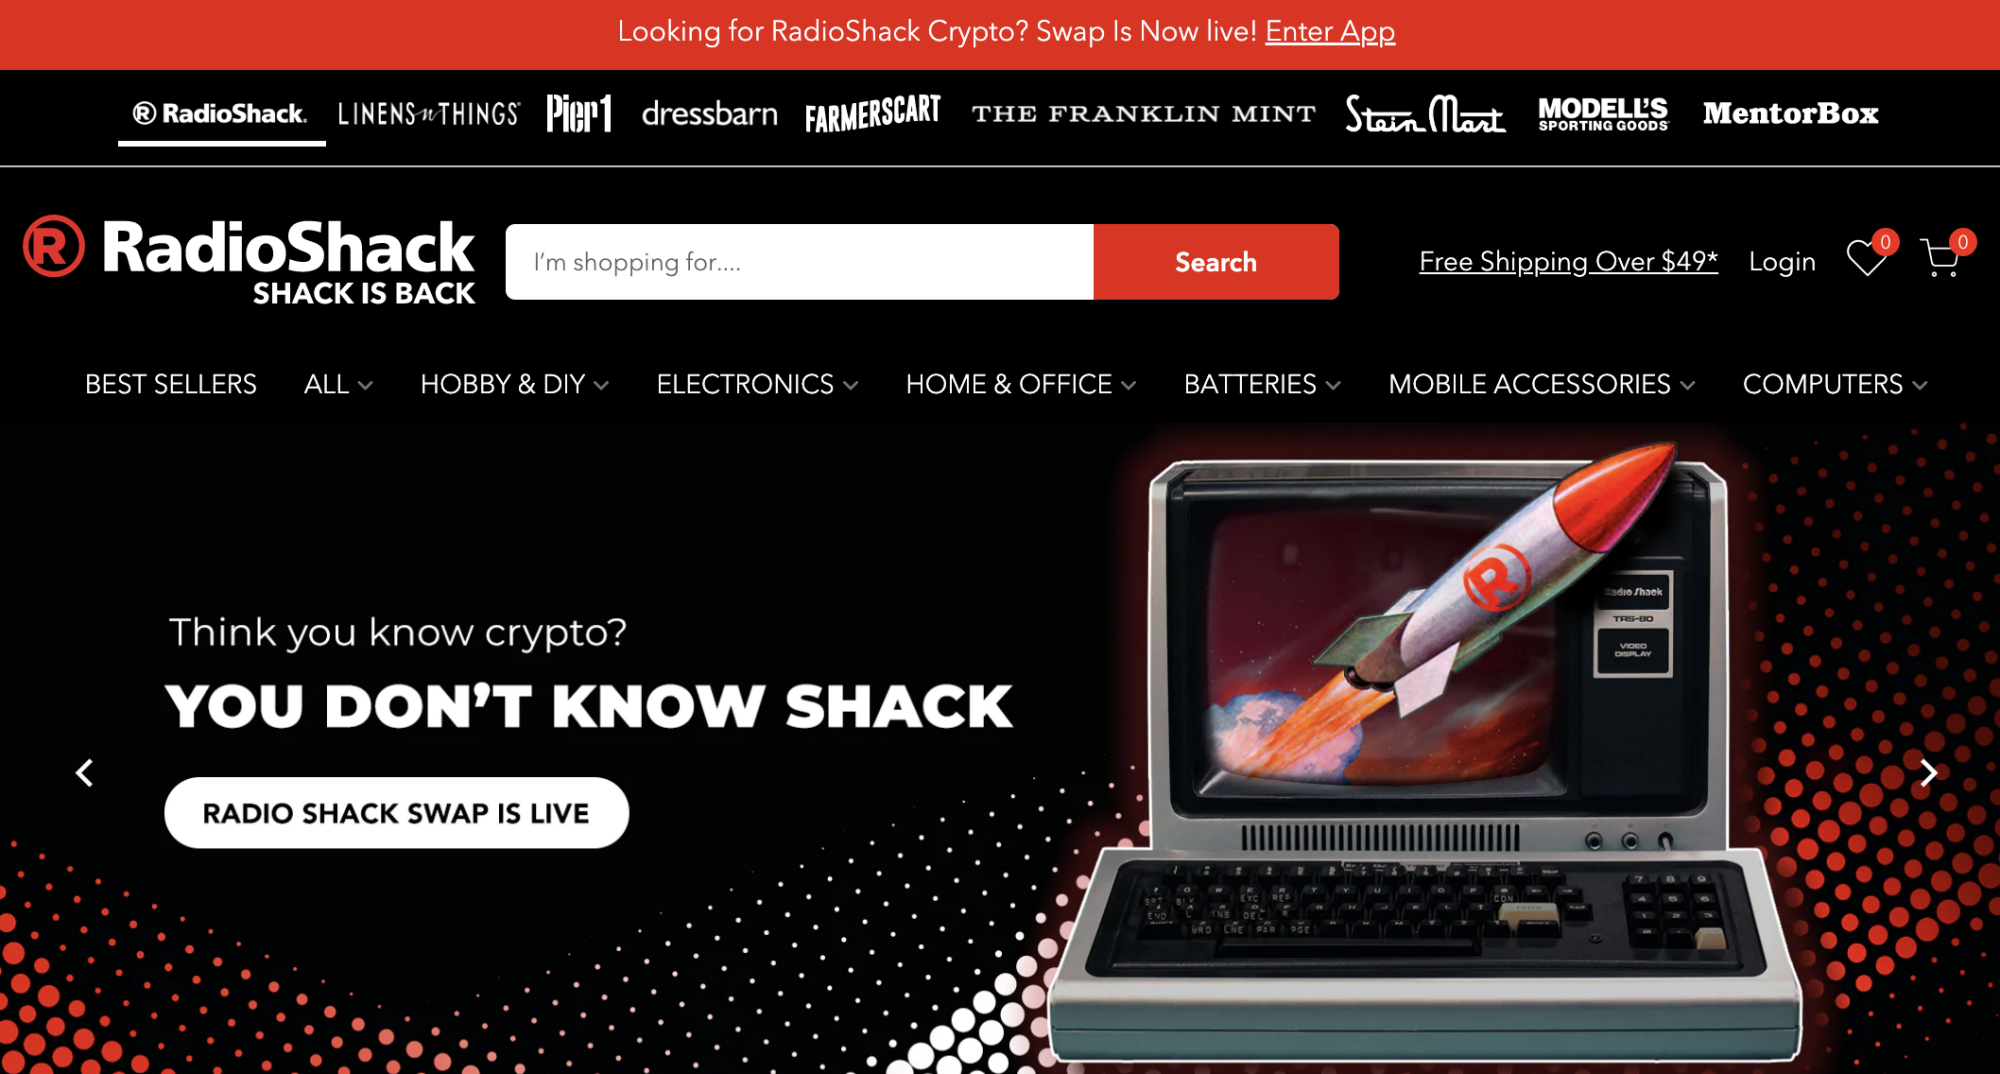 RadioShack homepage